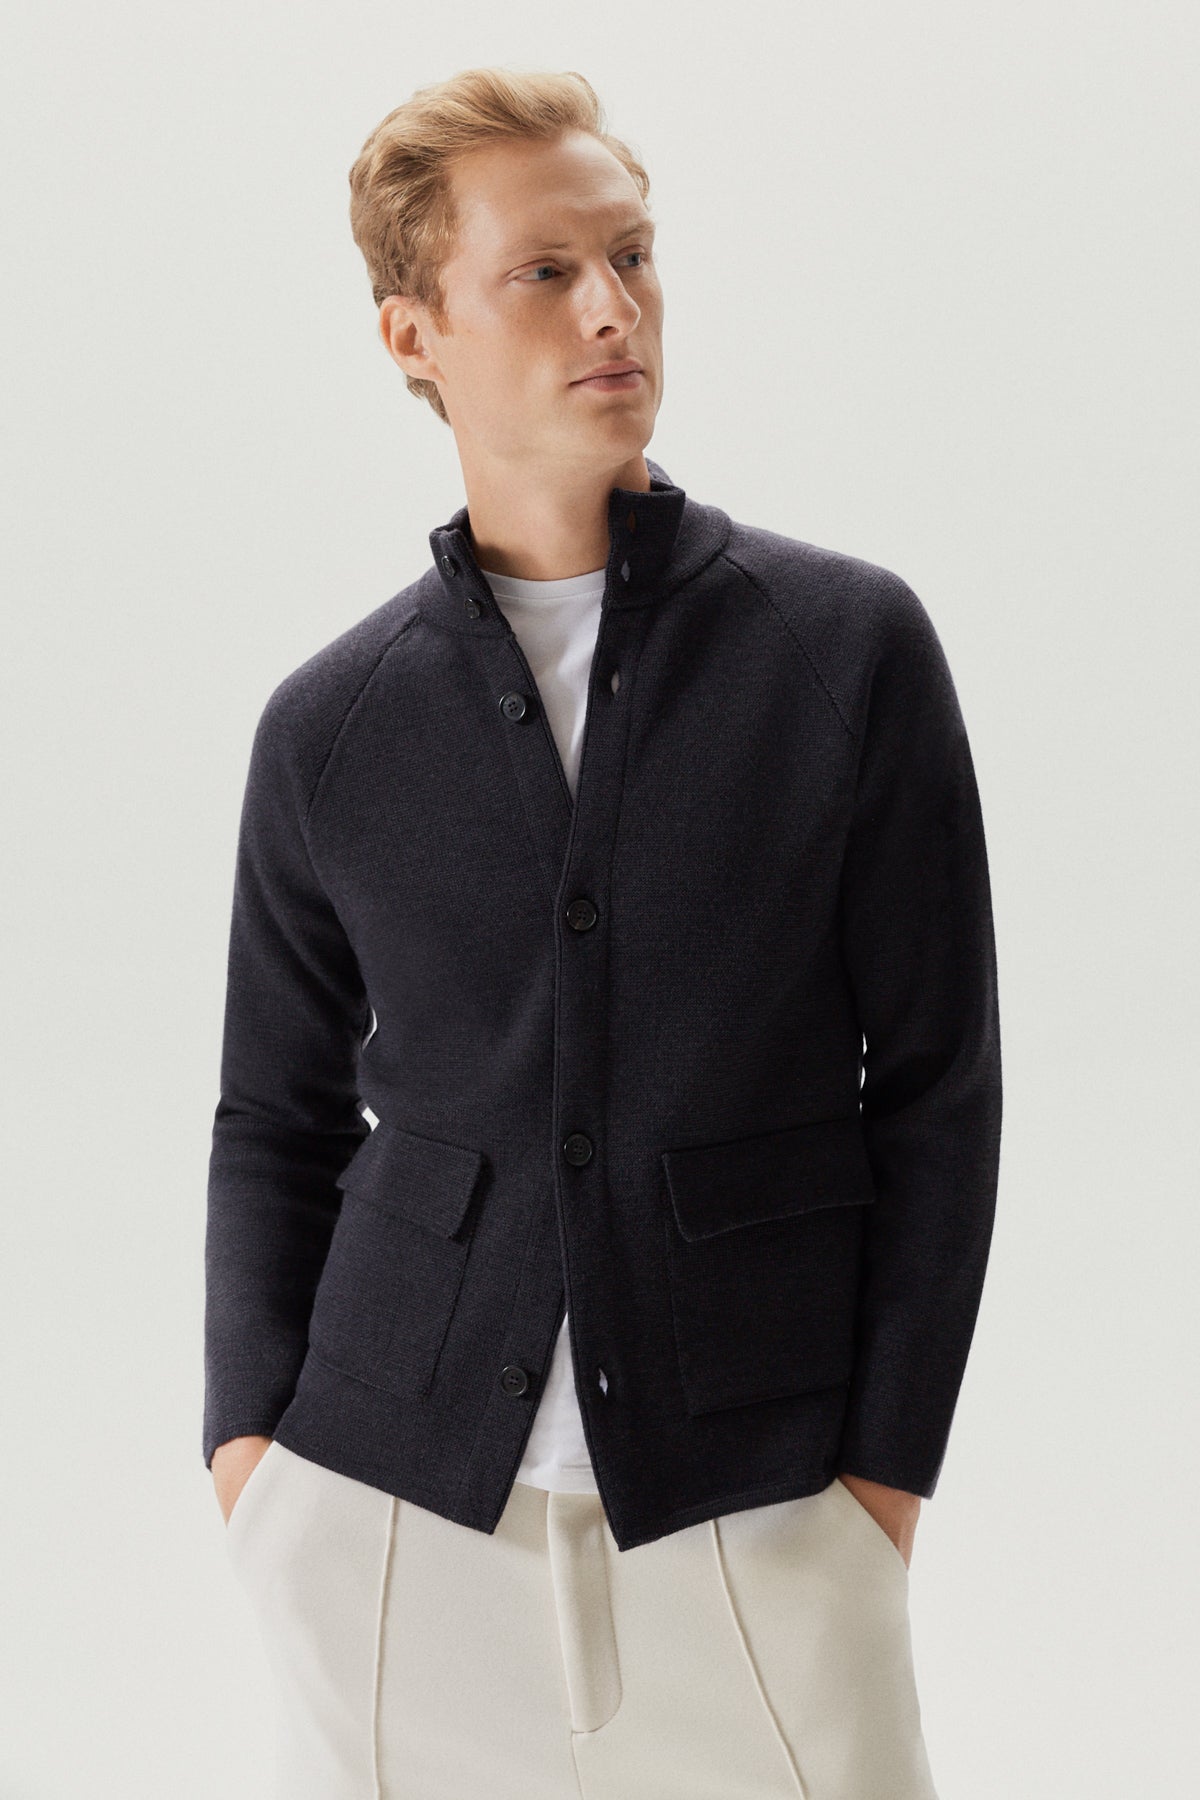 the merino wool high neck jacket anthracite grey